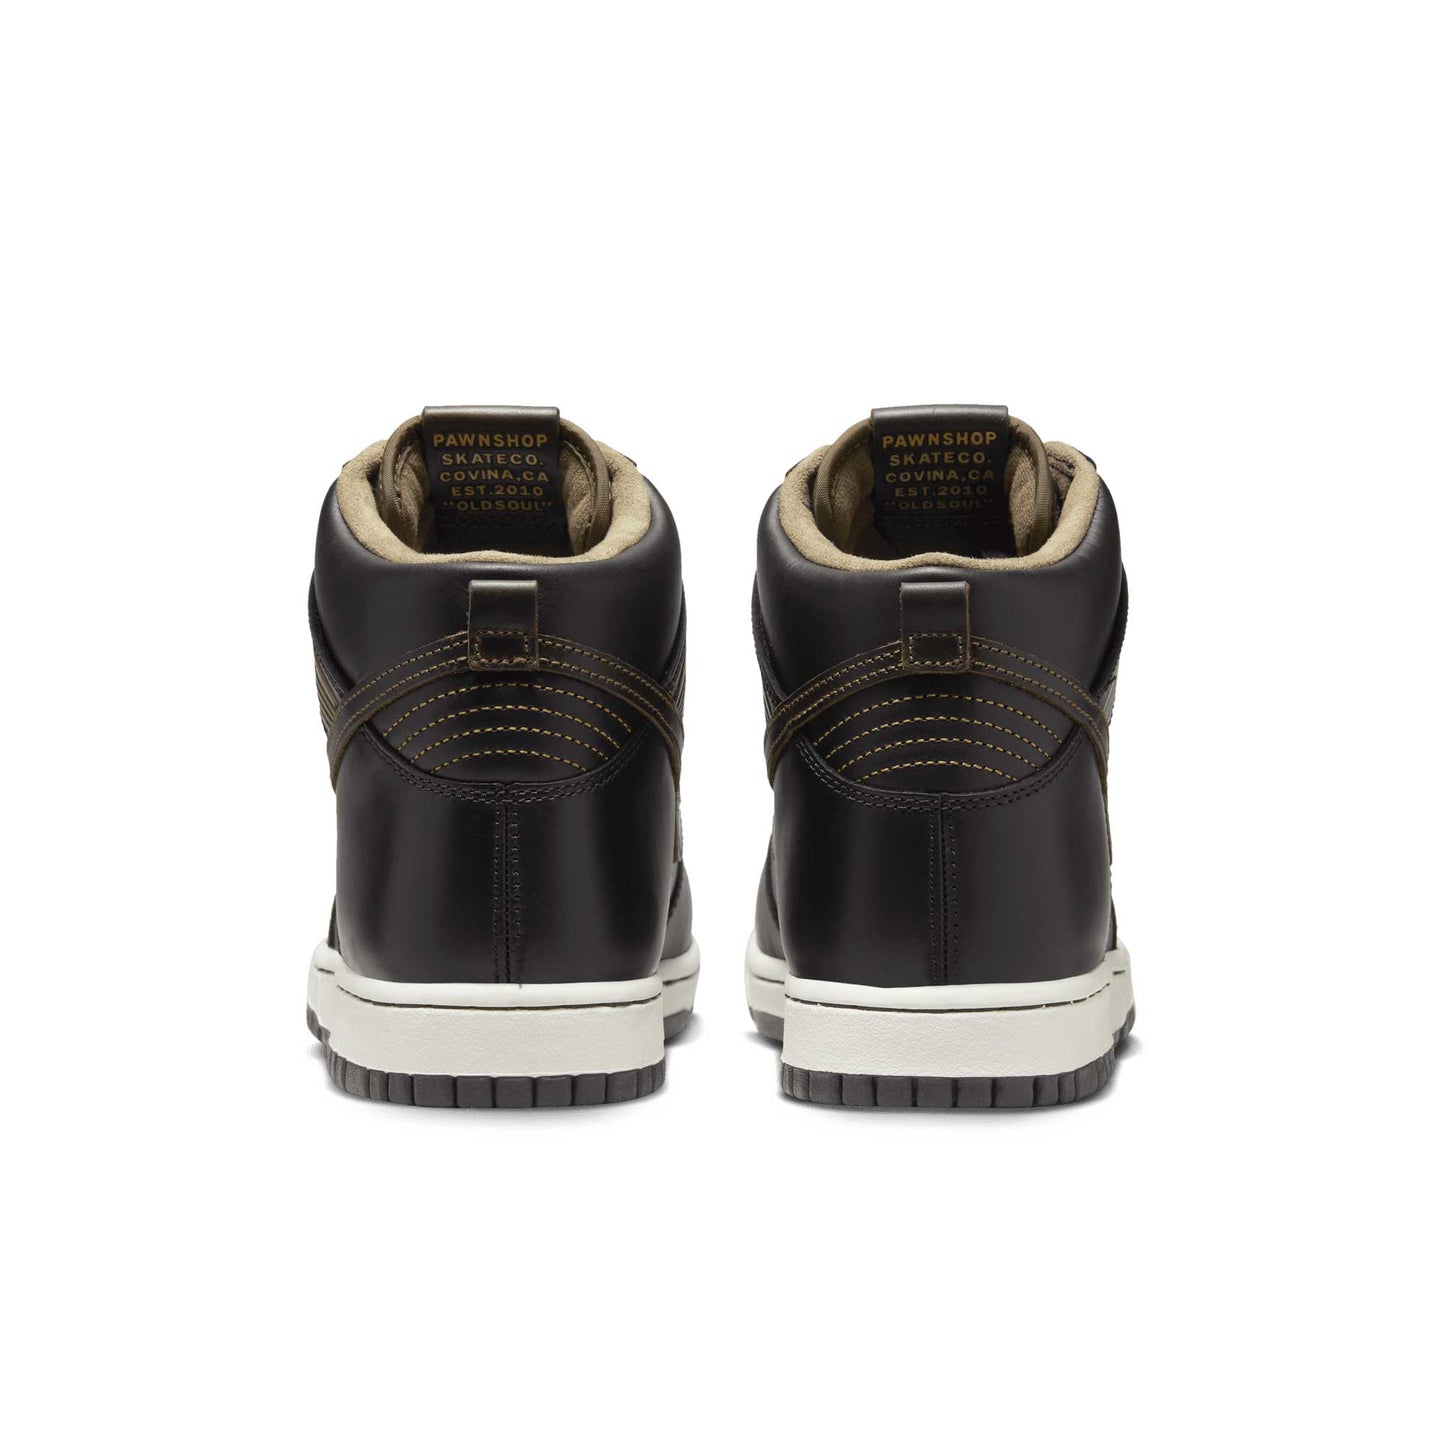 Nike SB Dunk High OG Pawnshop QS, black/black-metallic gold - Tiki Room Skateboards - 4